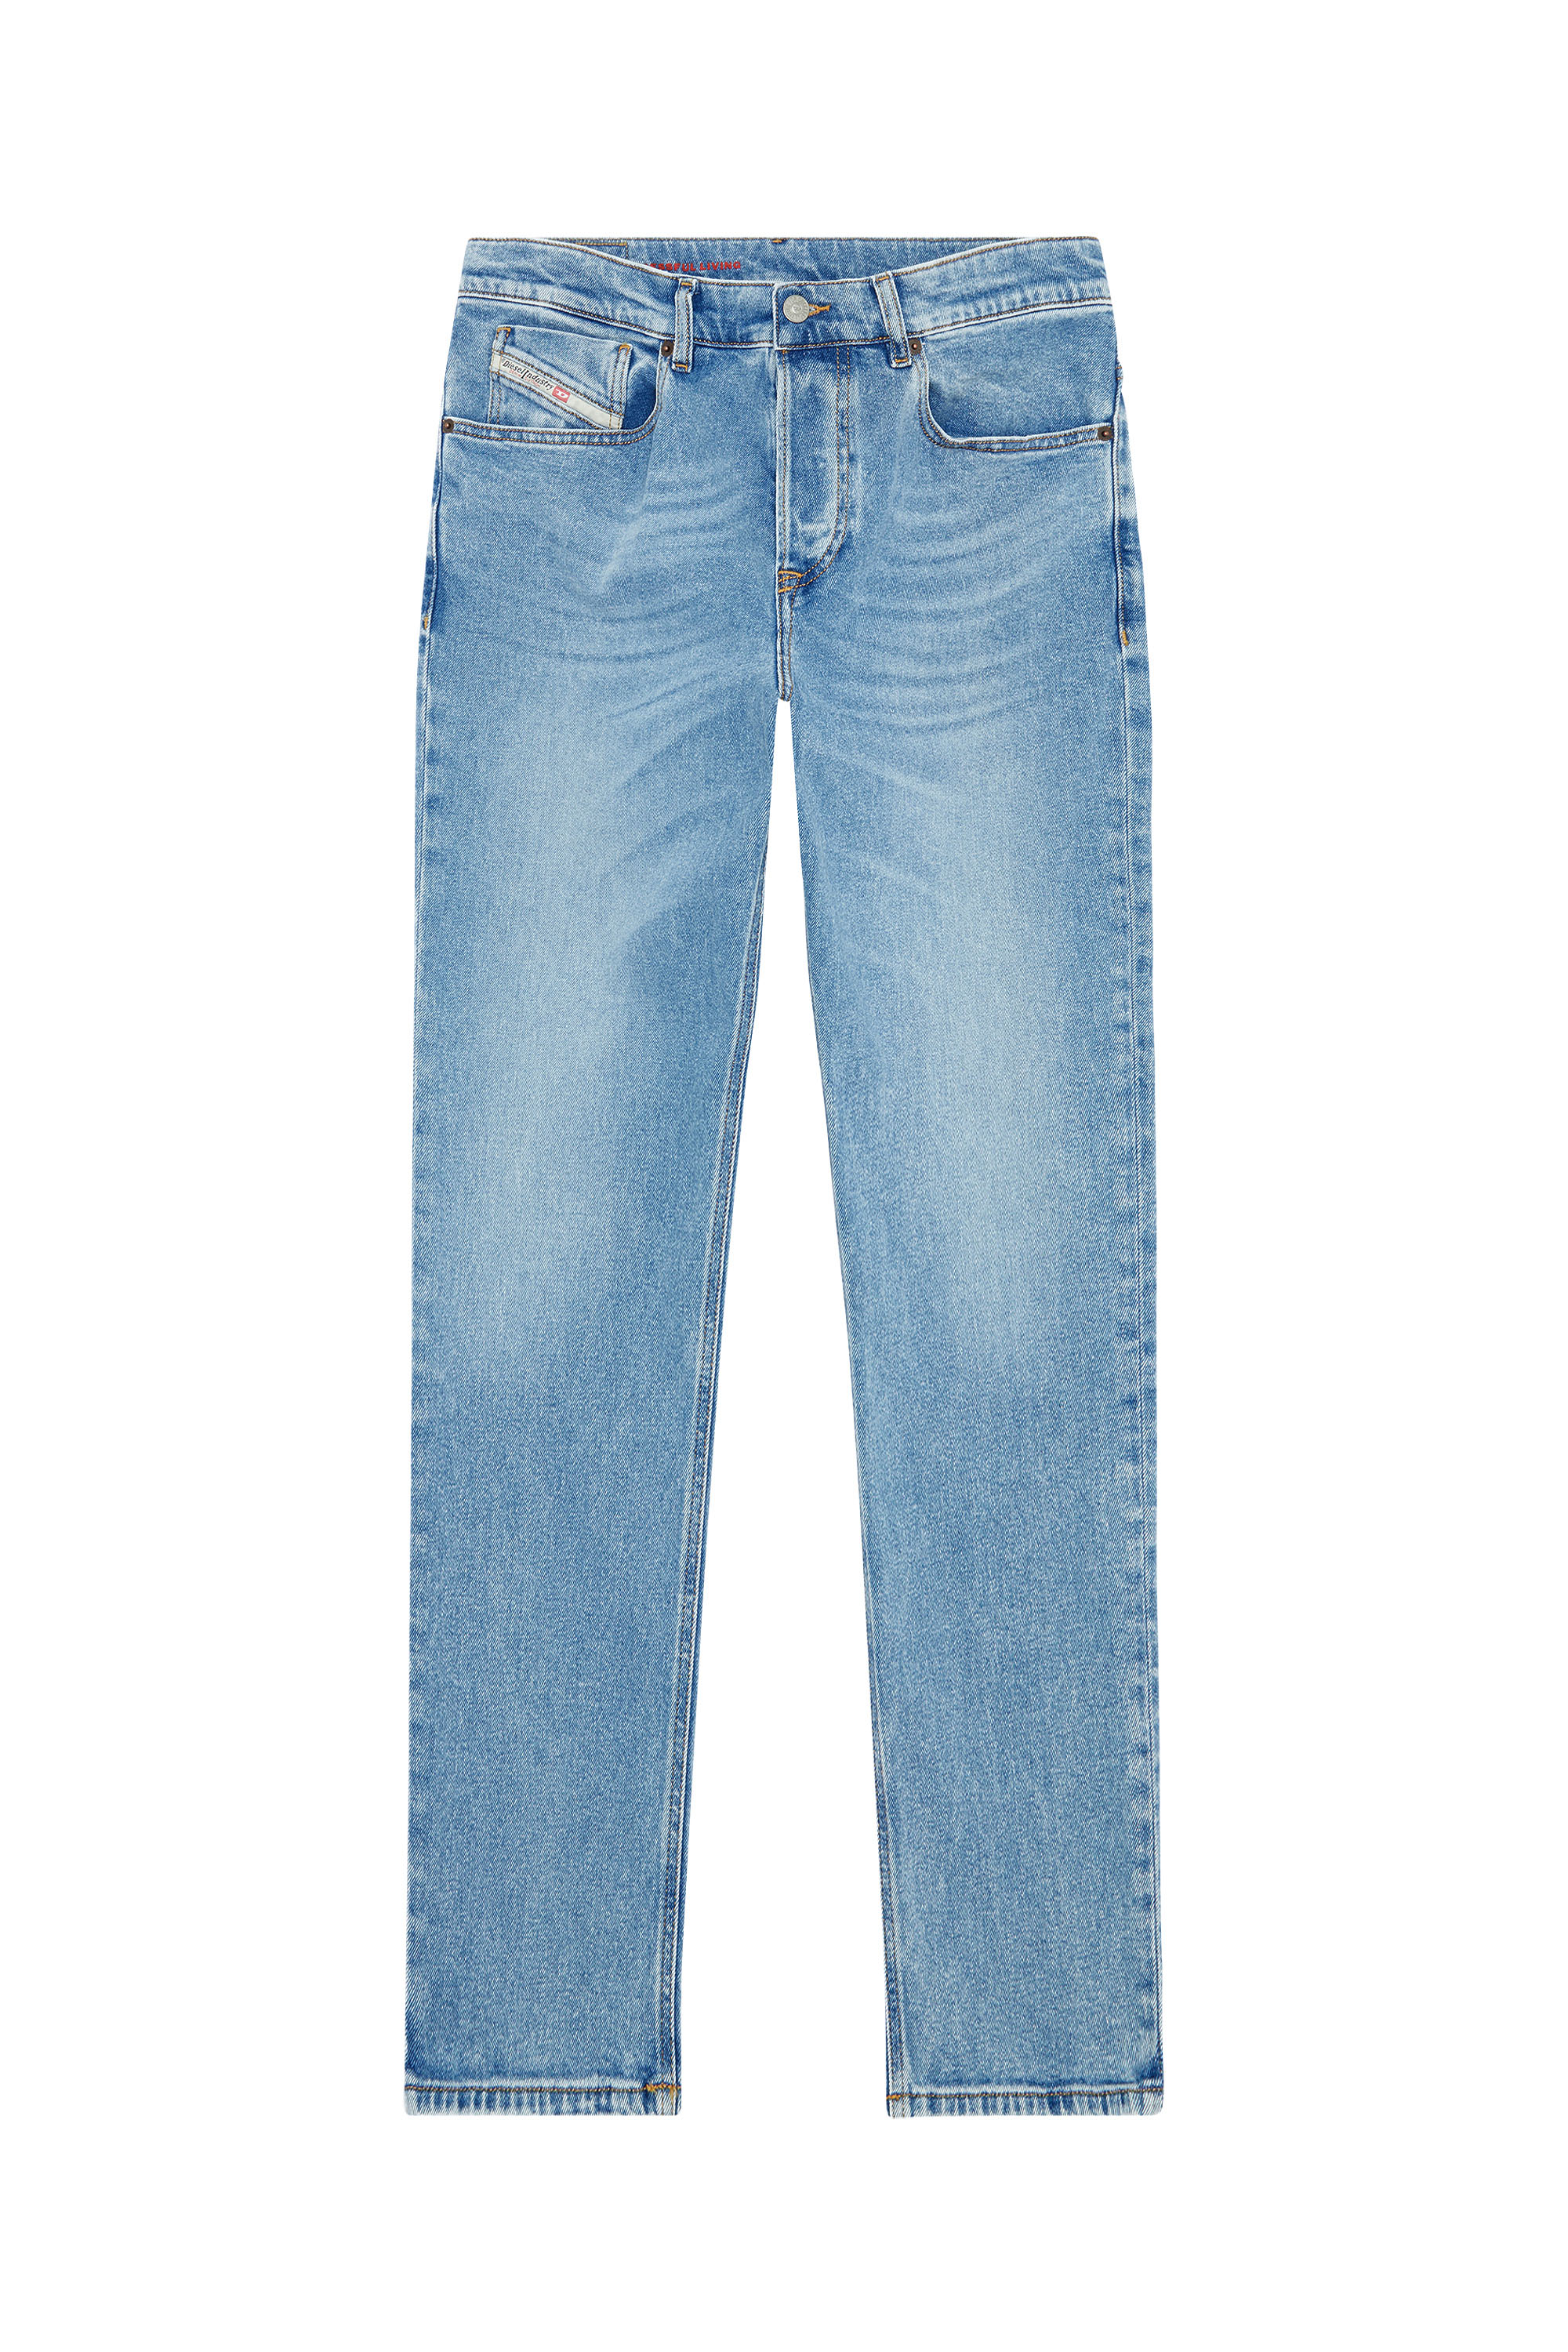 2005 D-Fining 9B92L Tapered Jeans, Light Blue